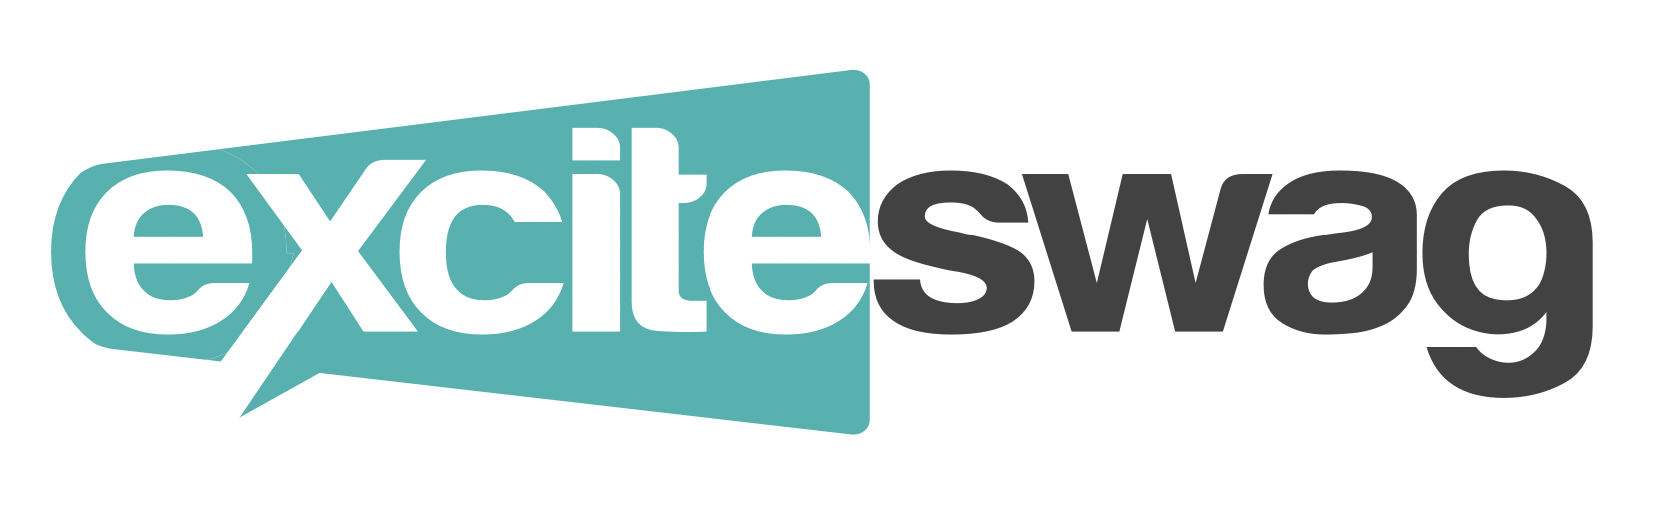 Excite Swag Company's Logo